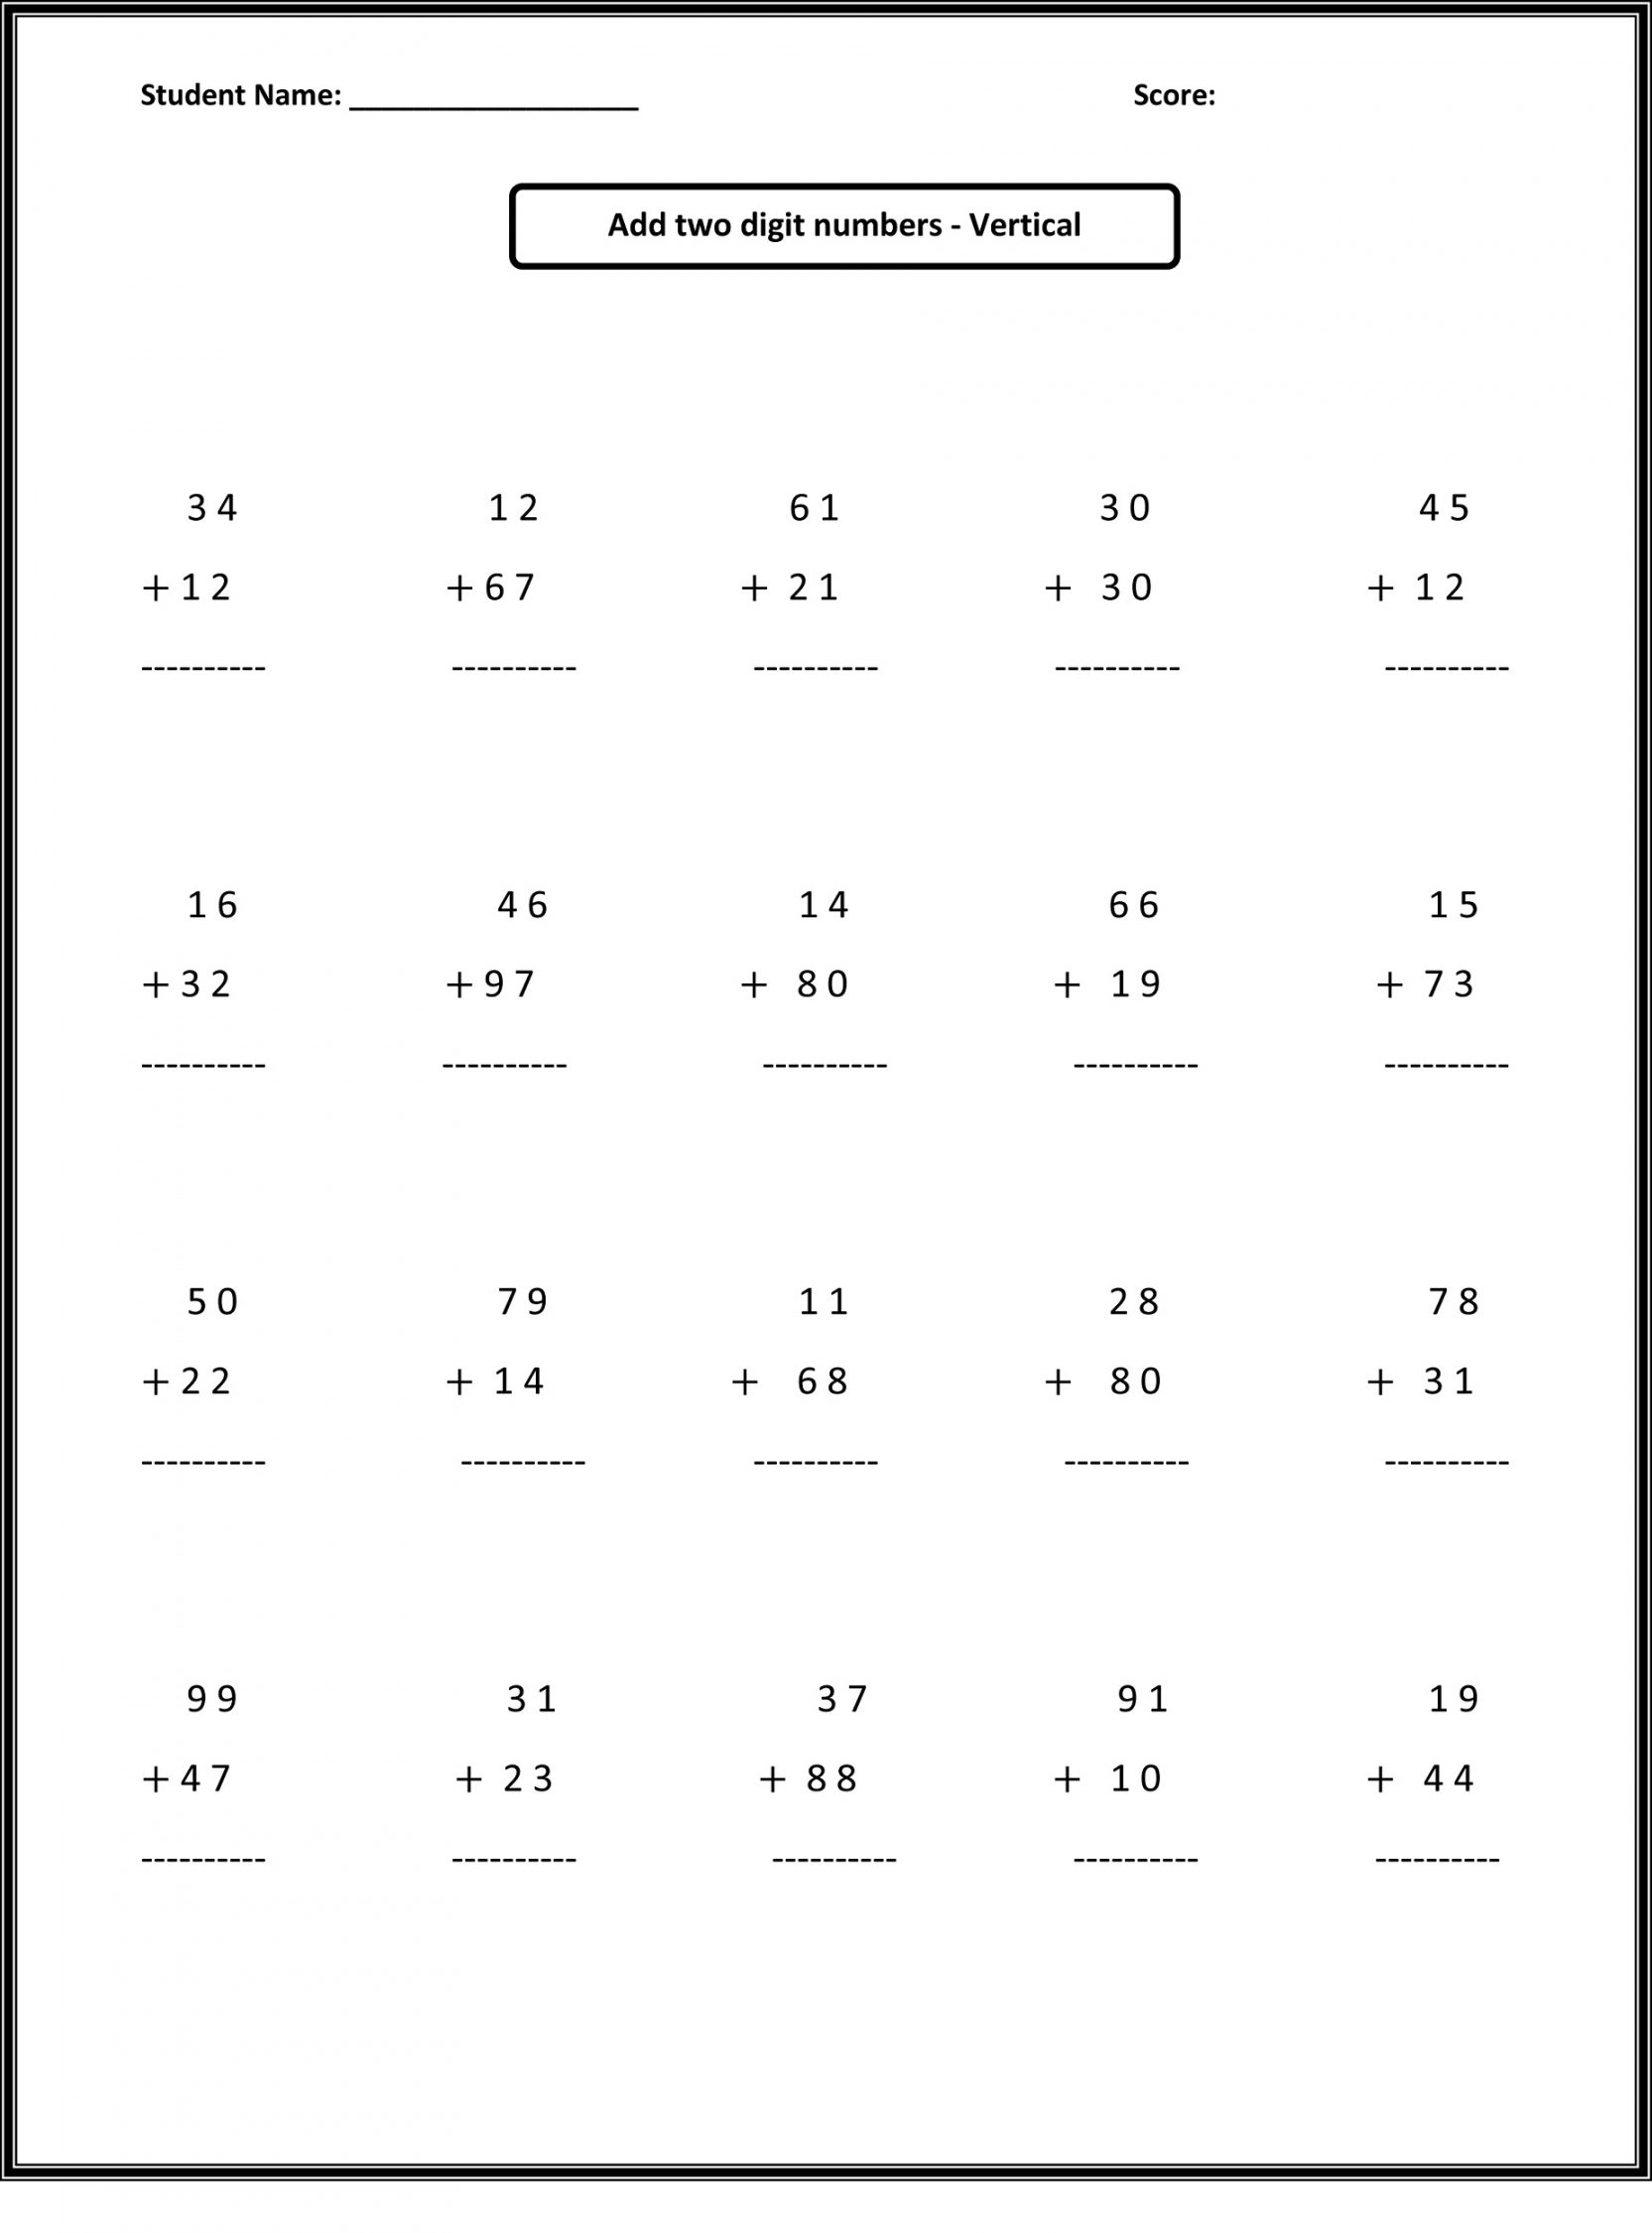 Free Printable 2nd Grade Math Worksheets - Printable - Free nd Grade Math Worksheets  Activity Shelter